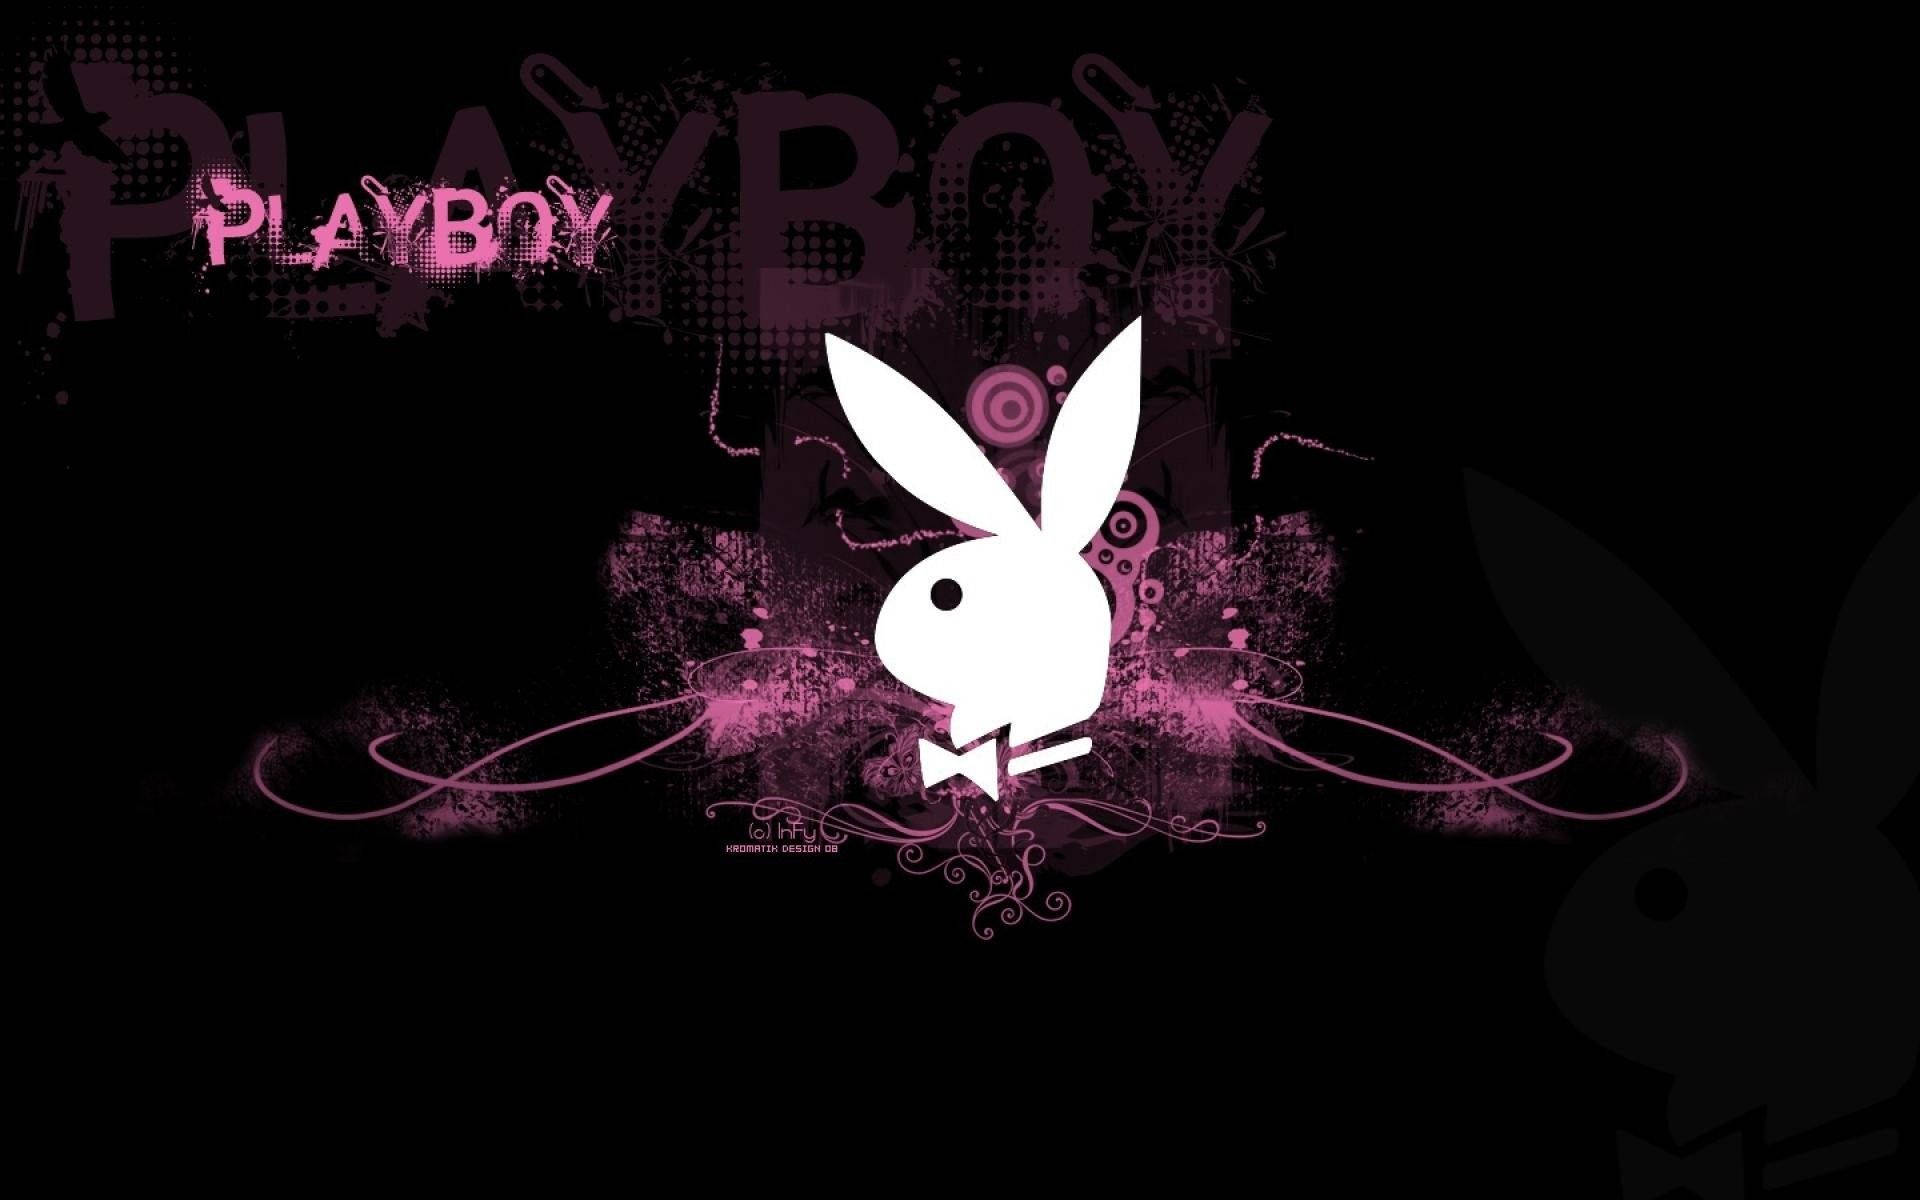 Playboy Logo With Swirl Patterns